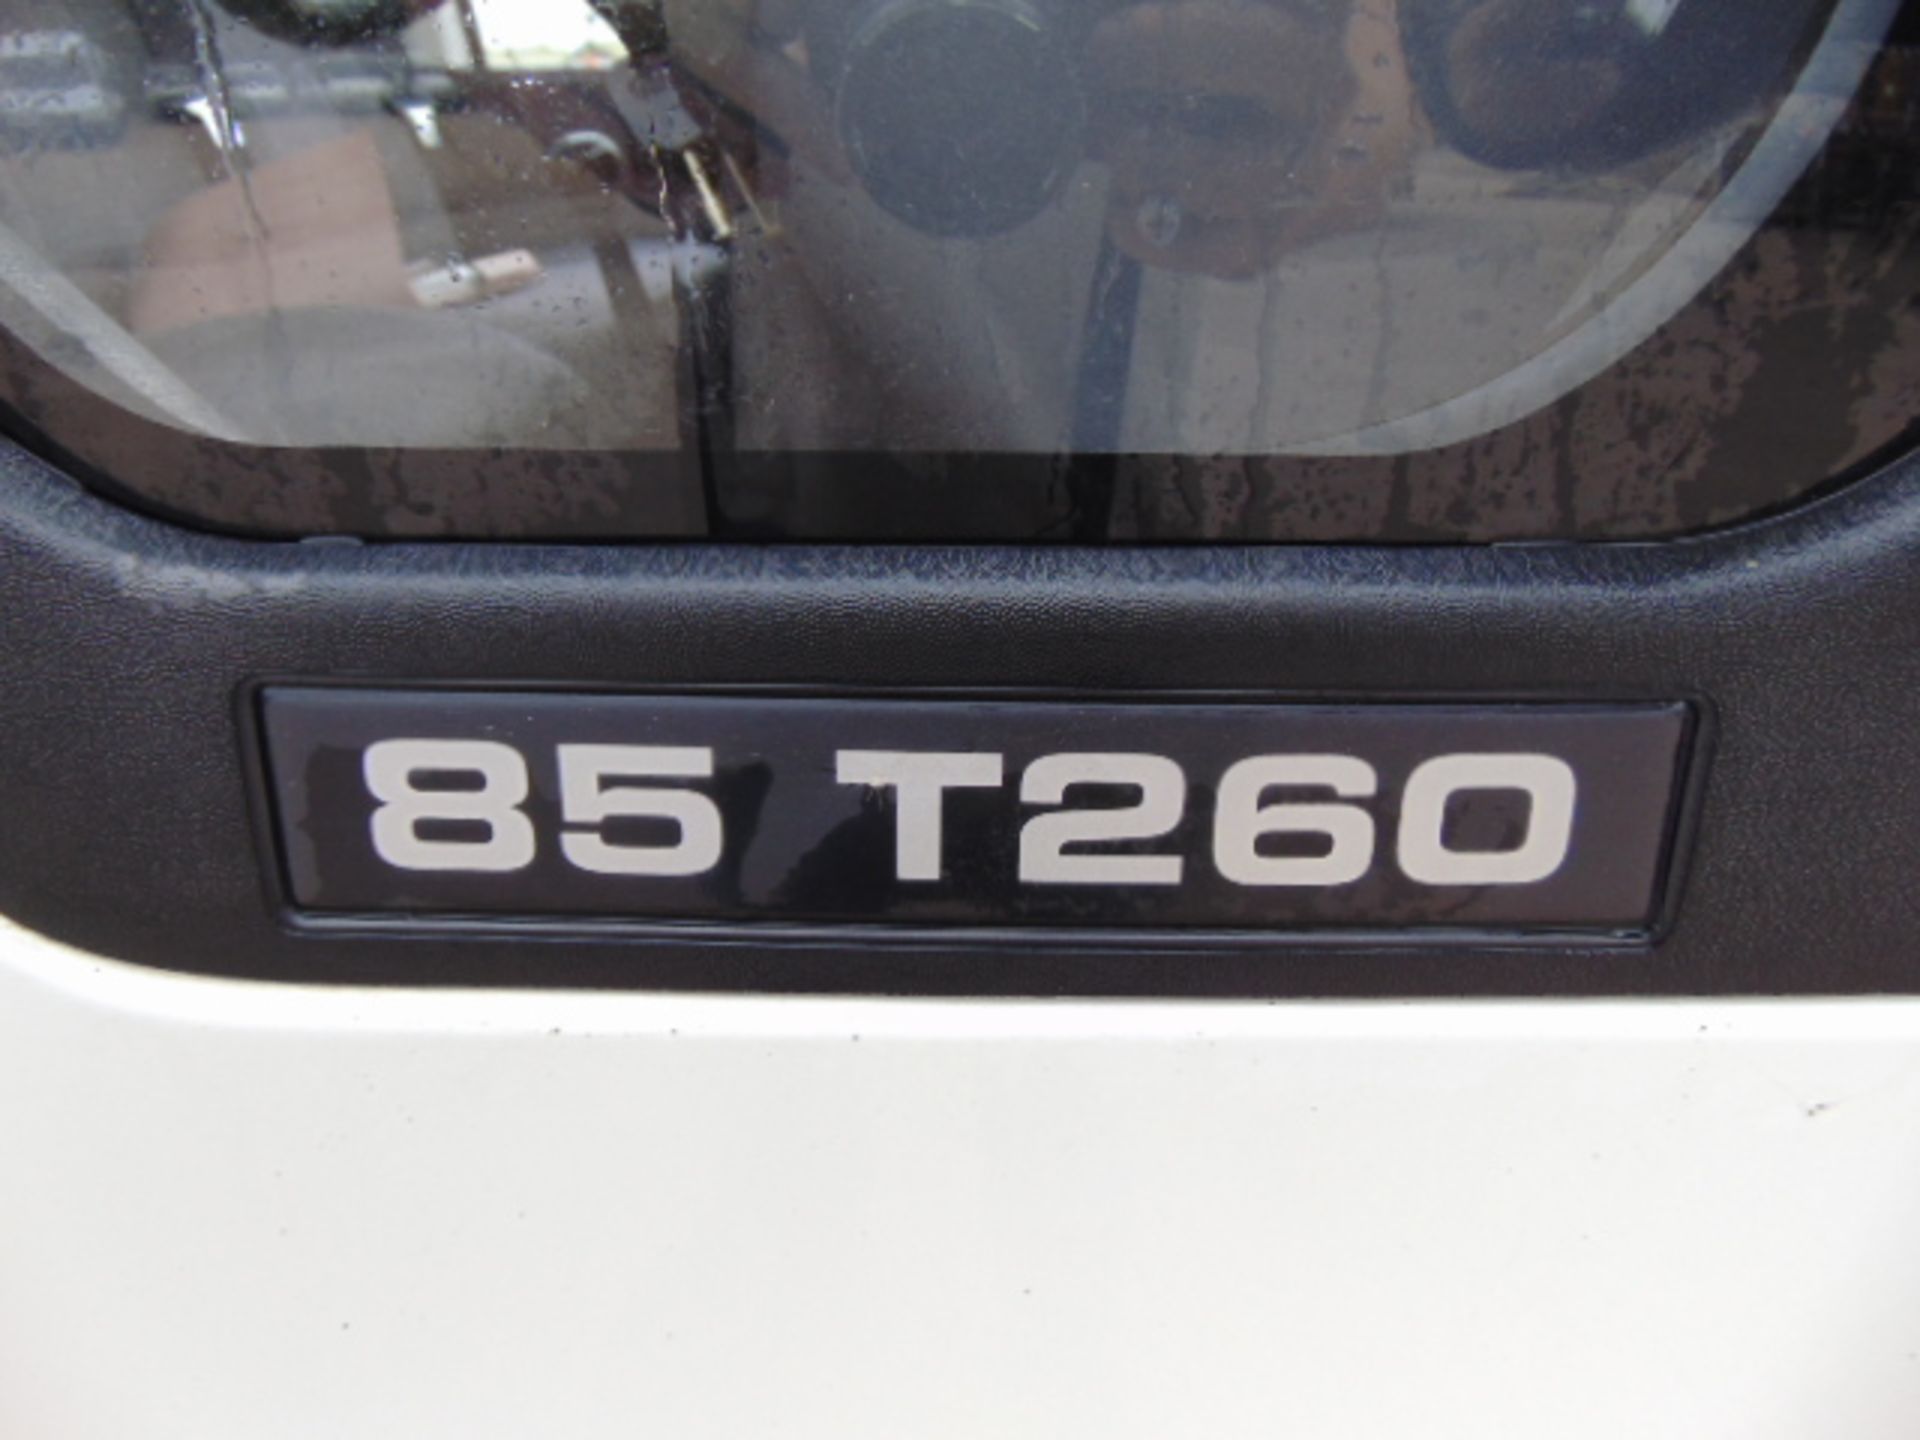 2005 Ford Transit 85 T260 Panel Van 13,507 miles - Image 21 of 21